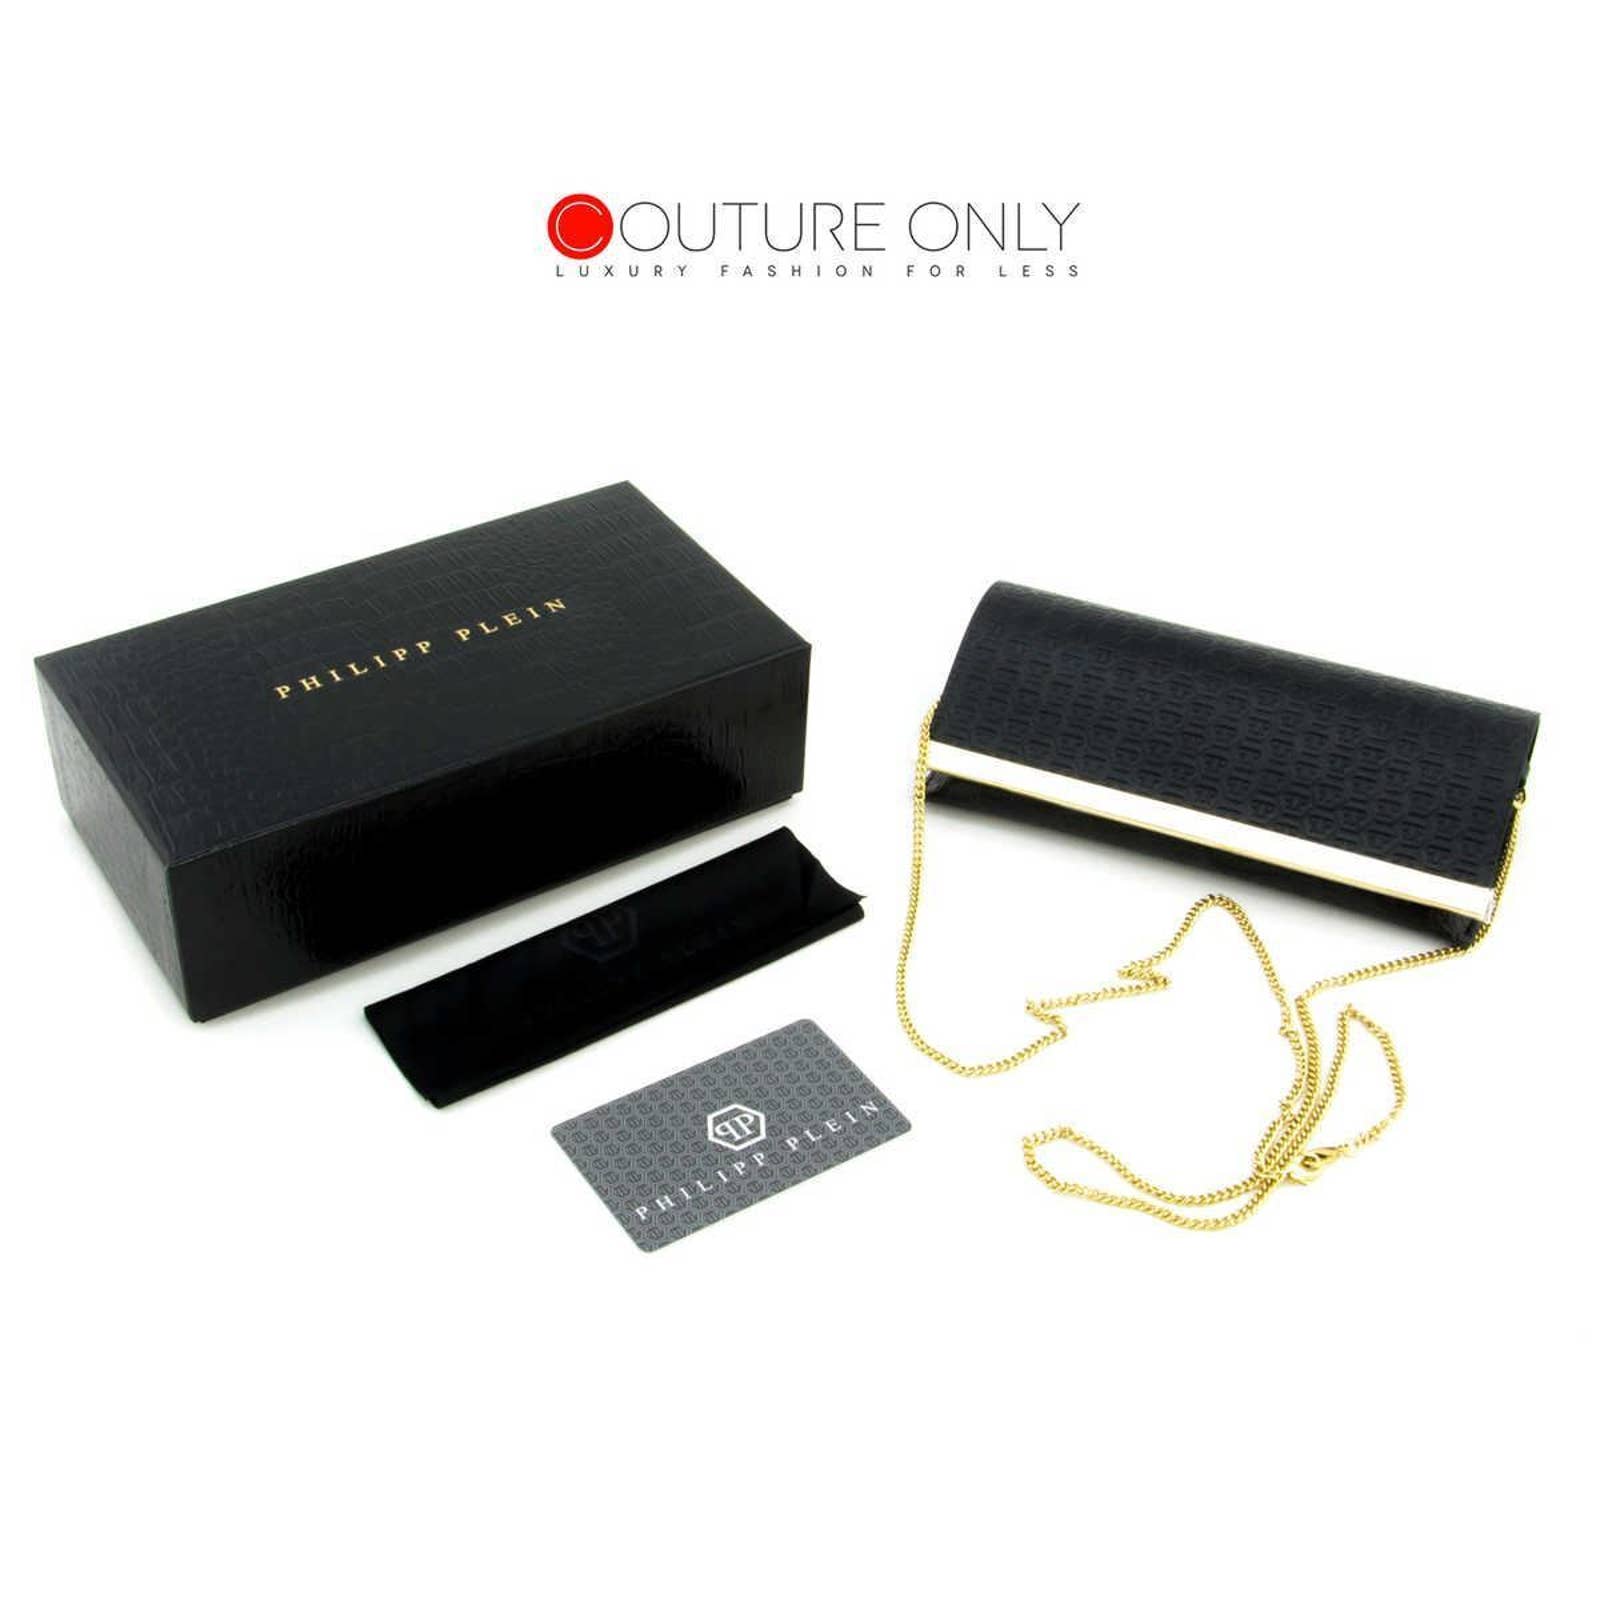 Women Titanium Rimless Sunglasses SPP027S-0300 Gray & Gold Rectangle